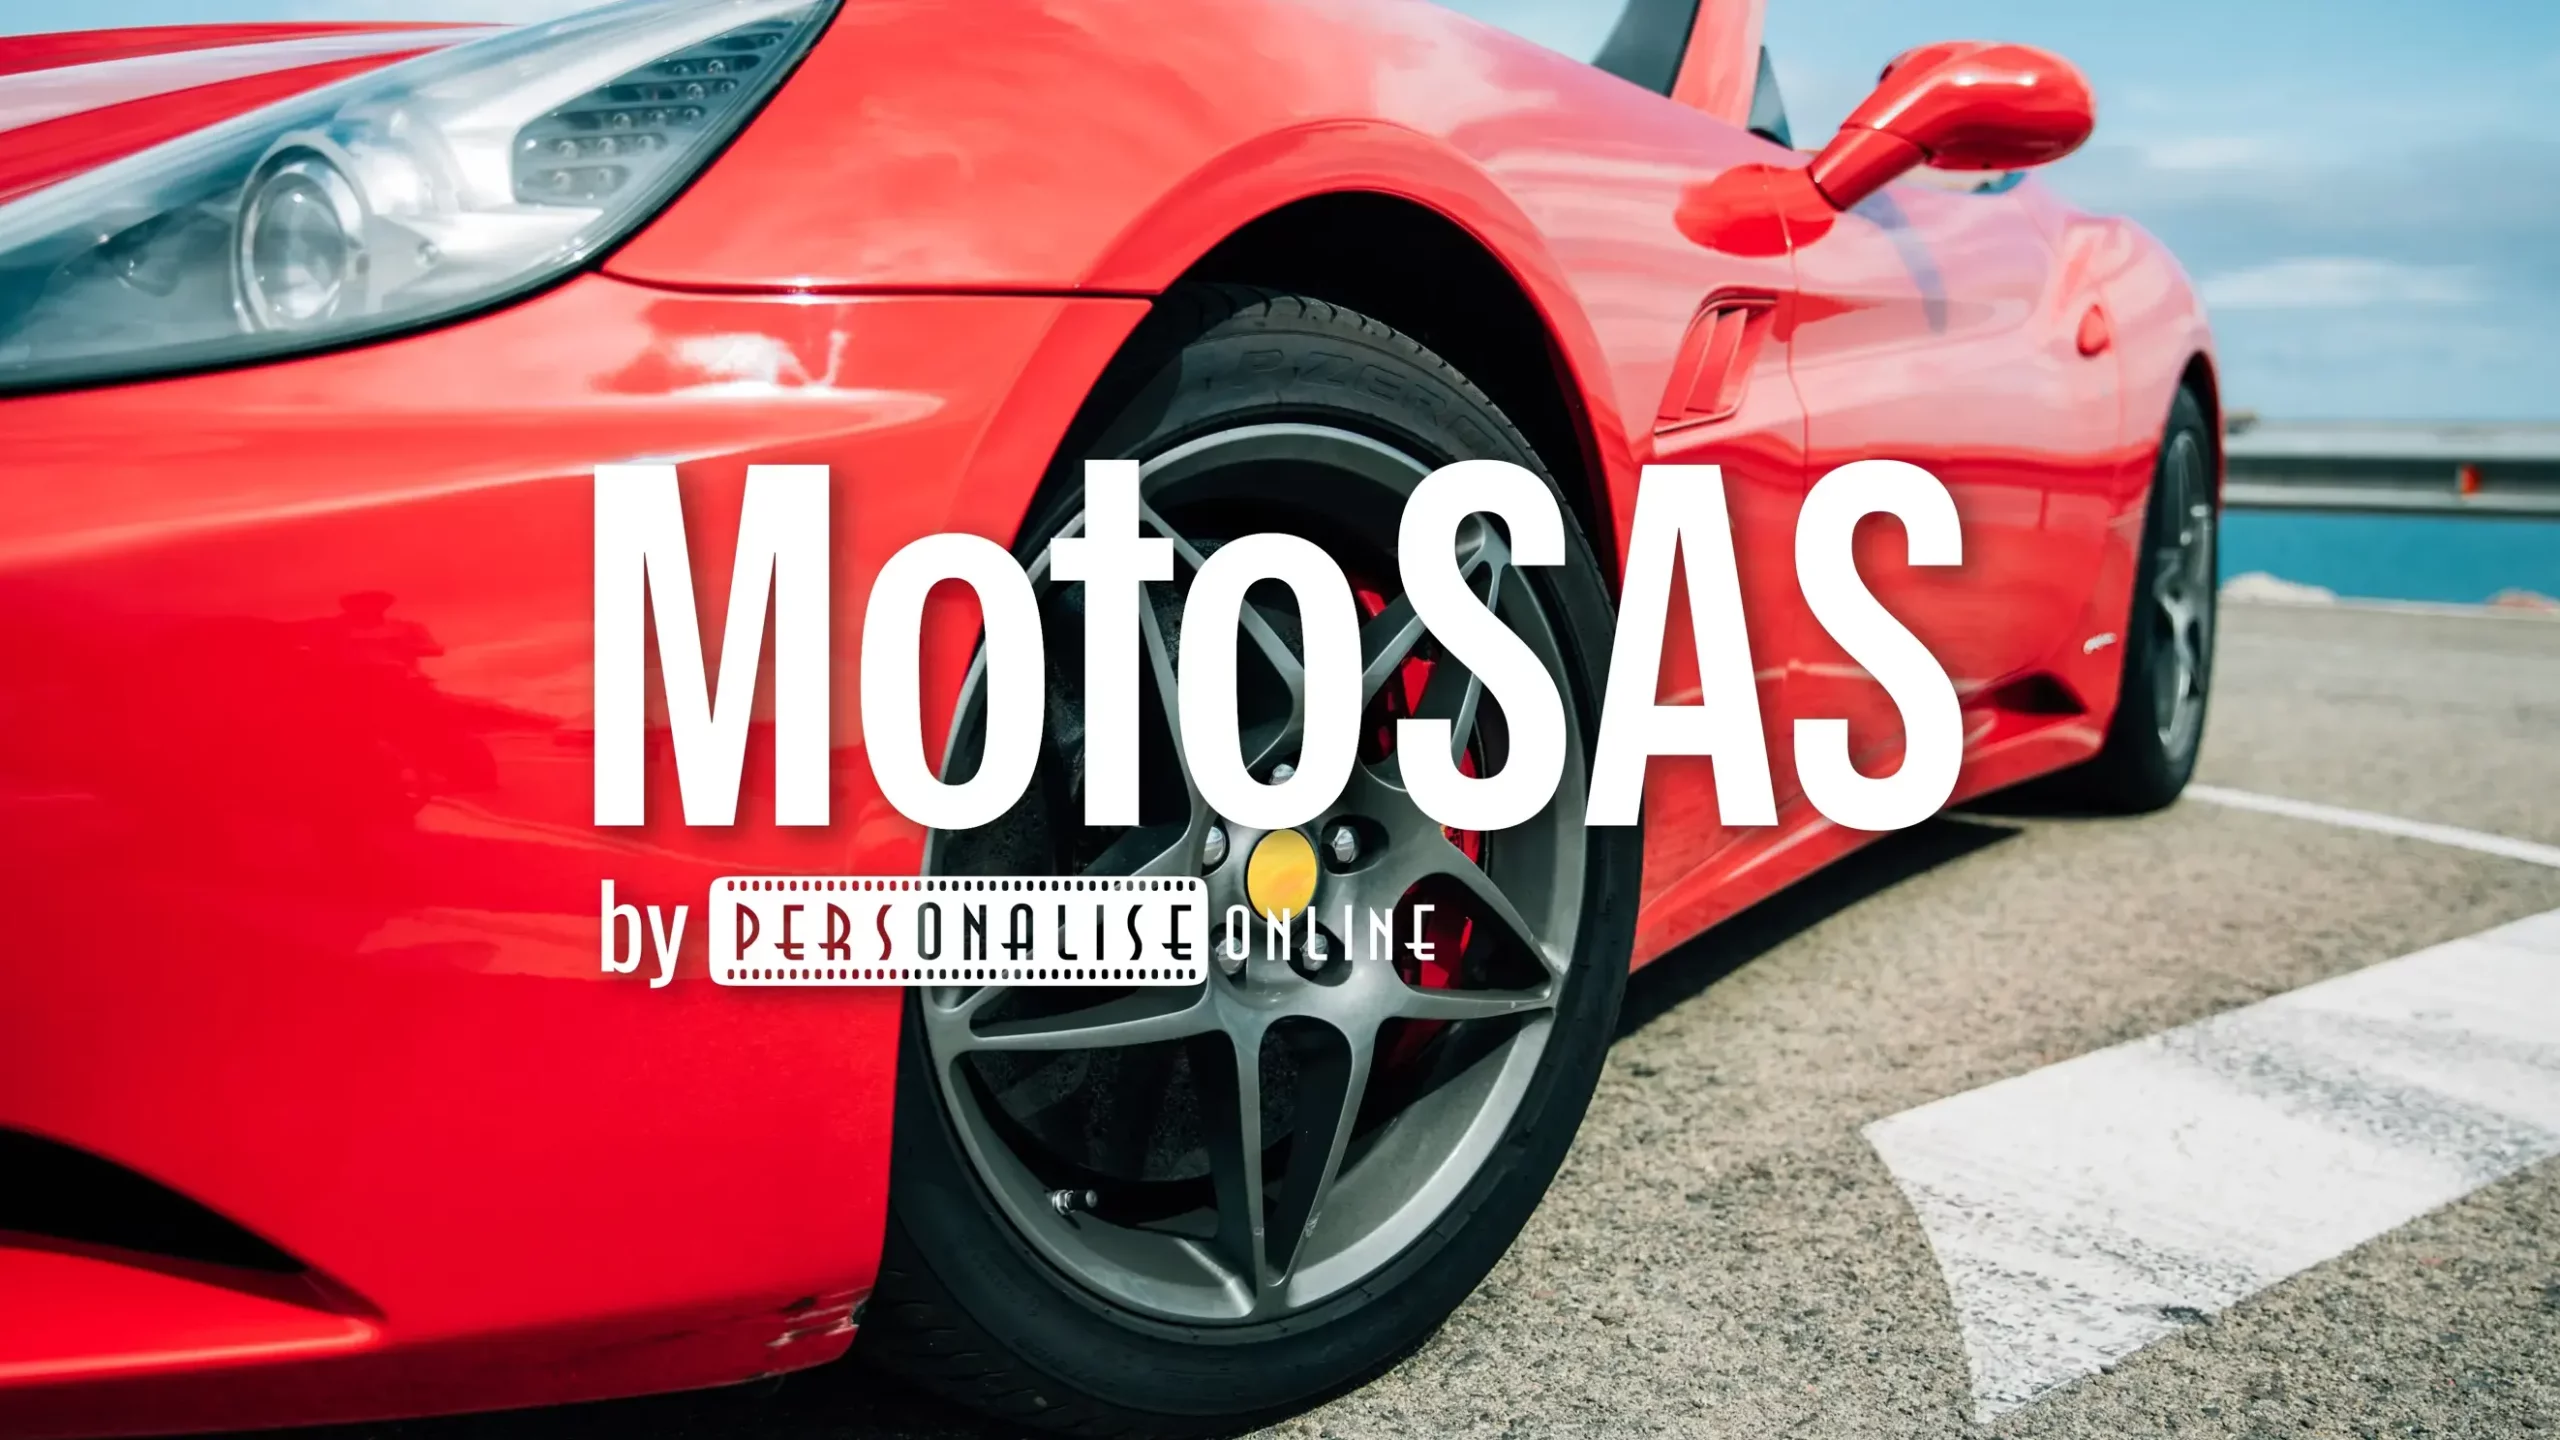 Motosas: Pioneering Urban Mobility